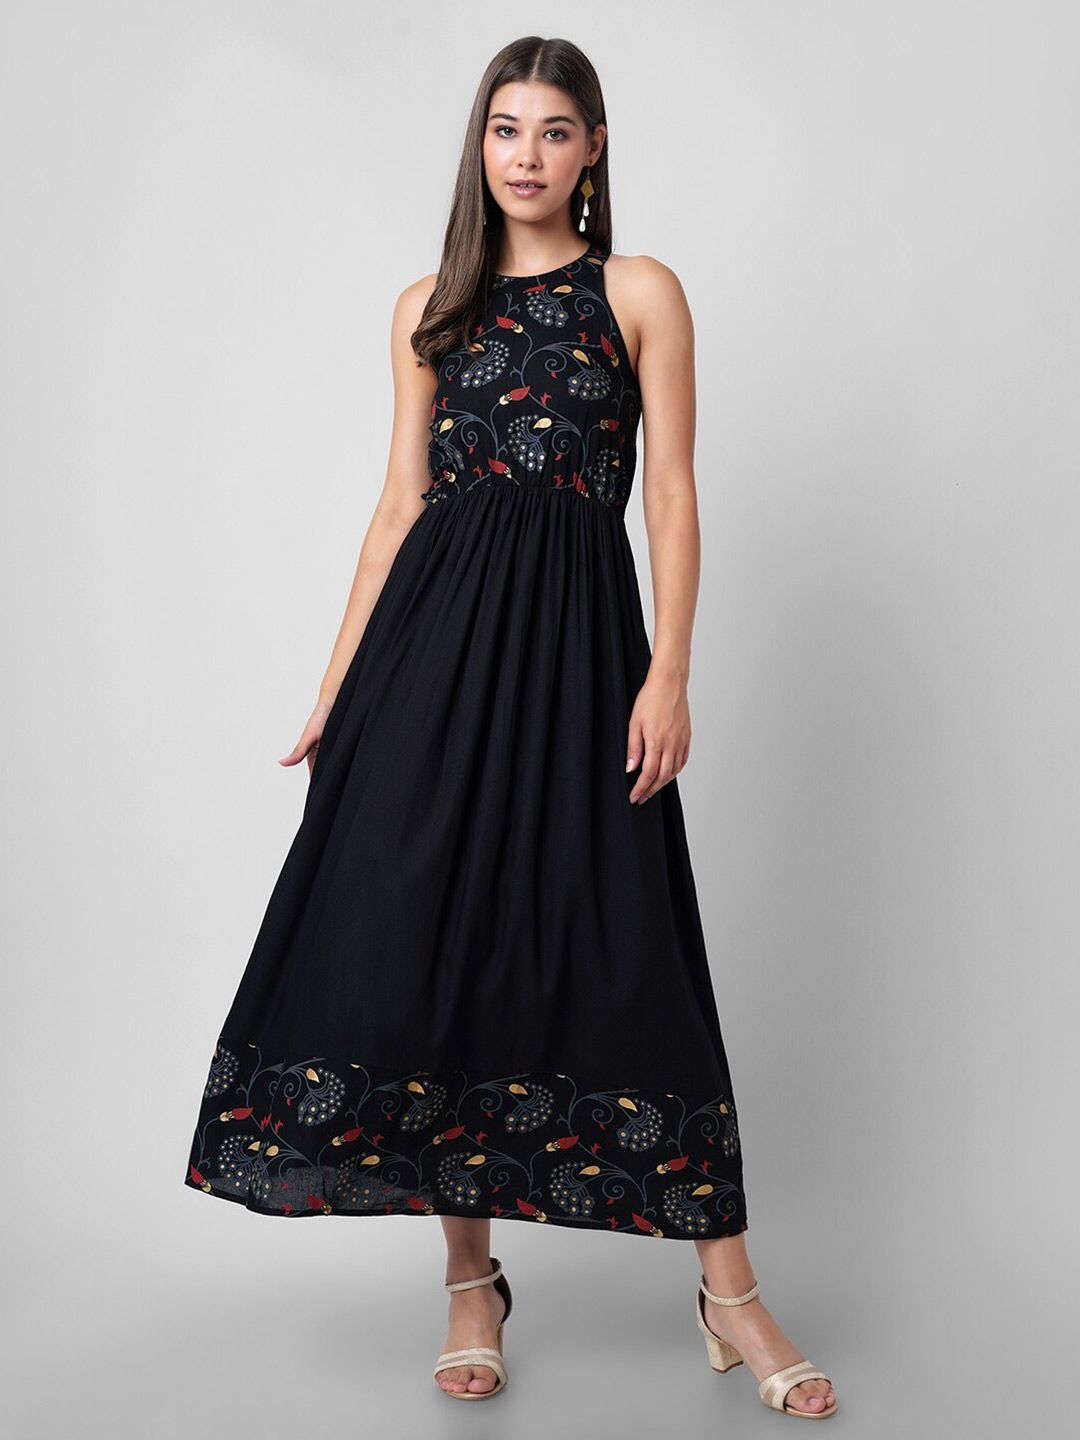 PURSHOTTAM WALA Black Floral Maxi Dress Price in India